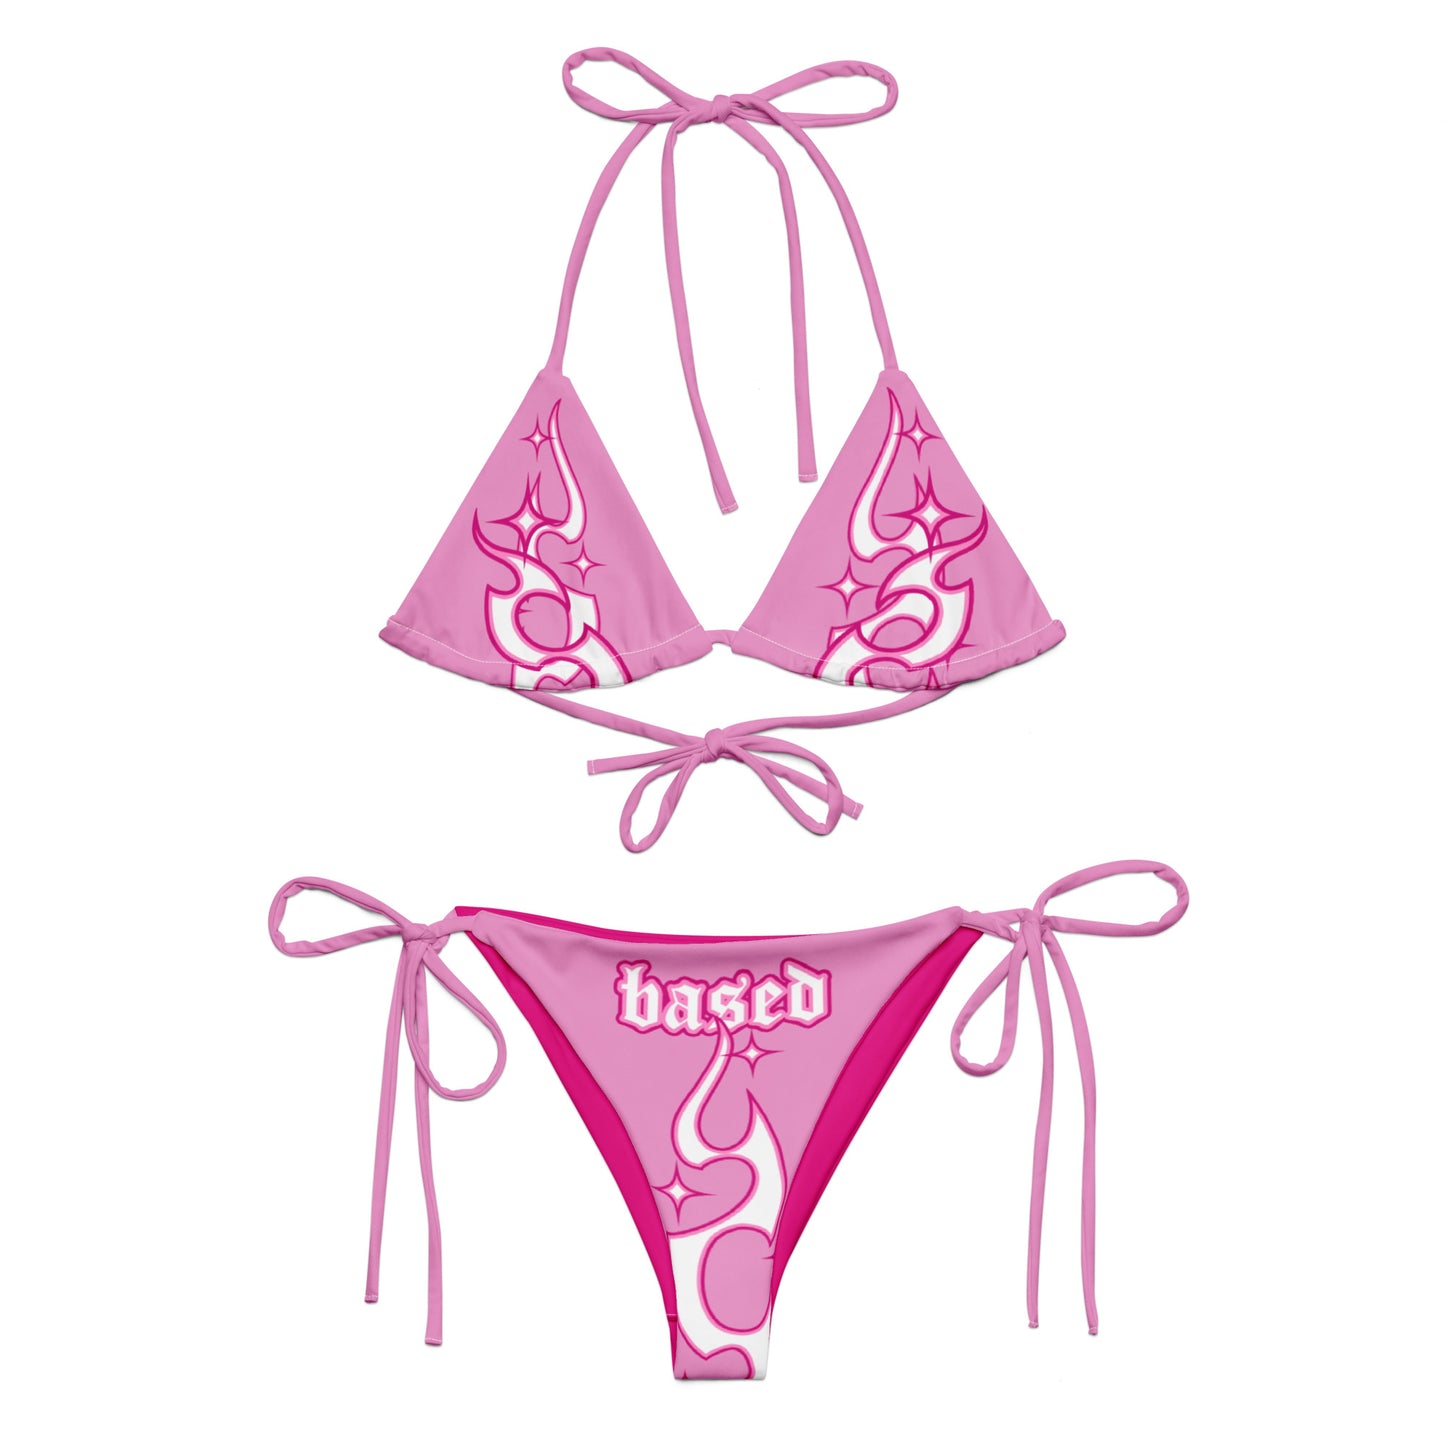 Based String Bikini Set